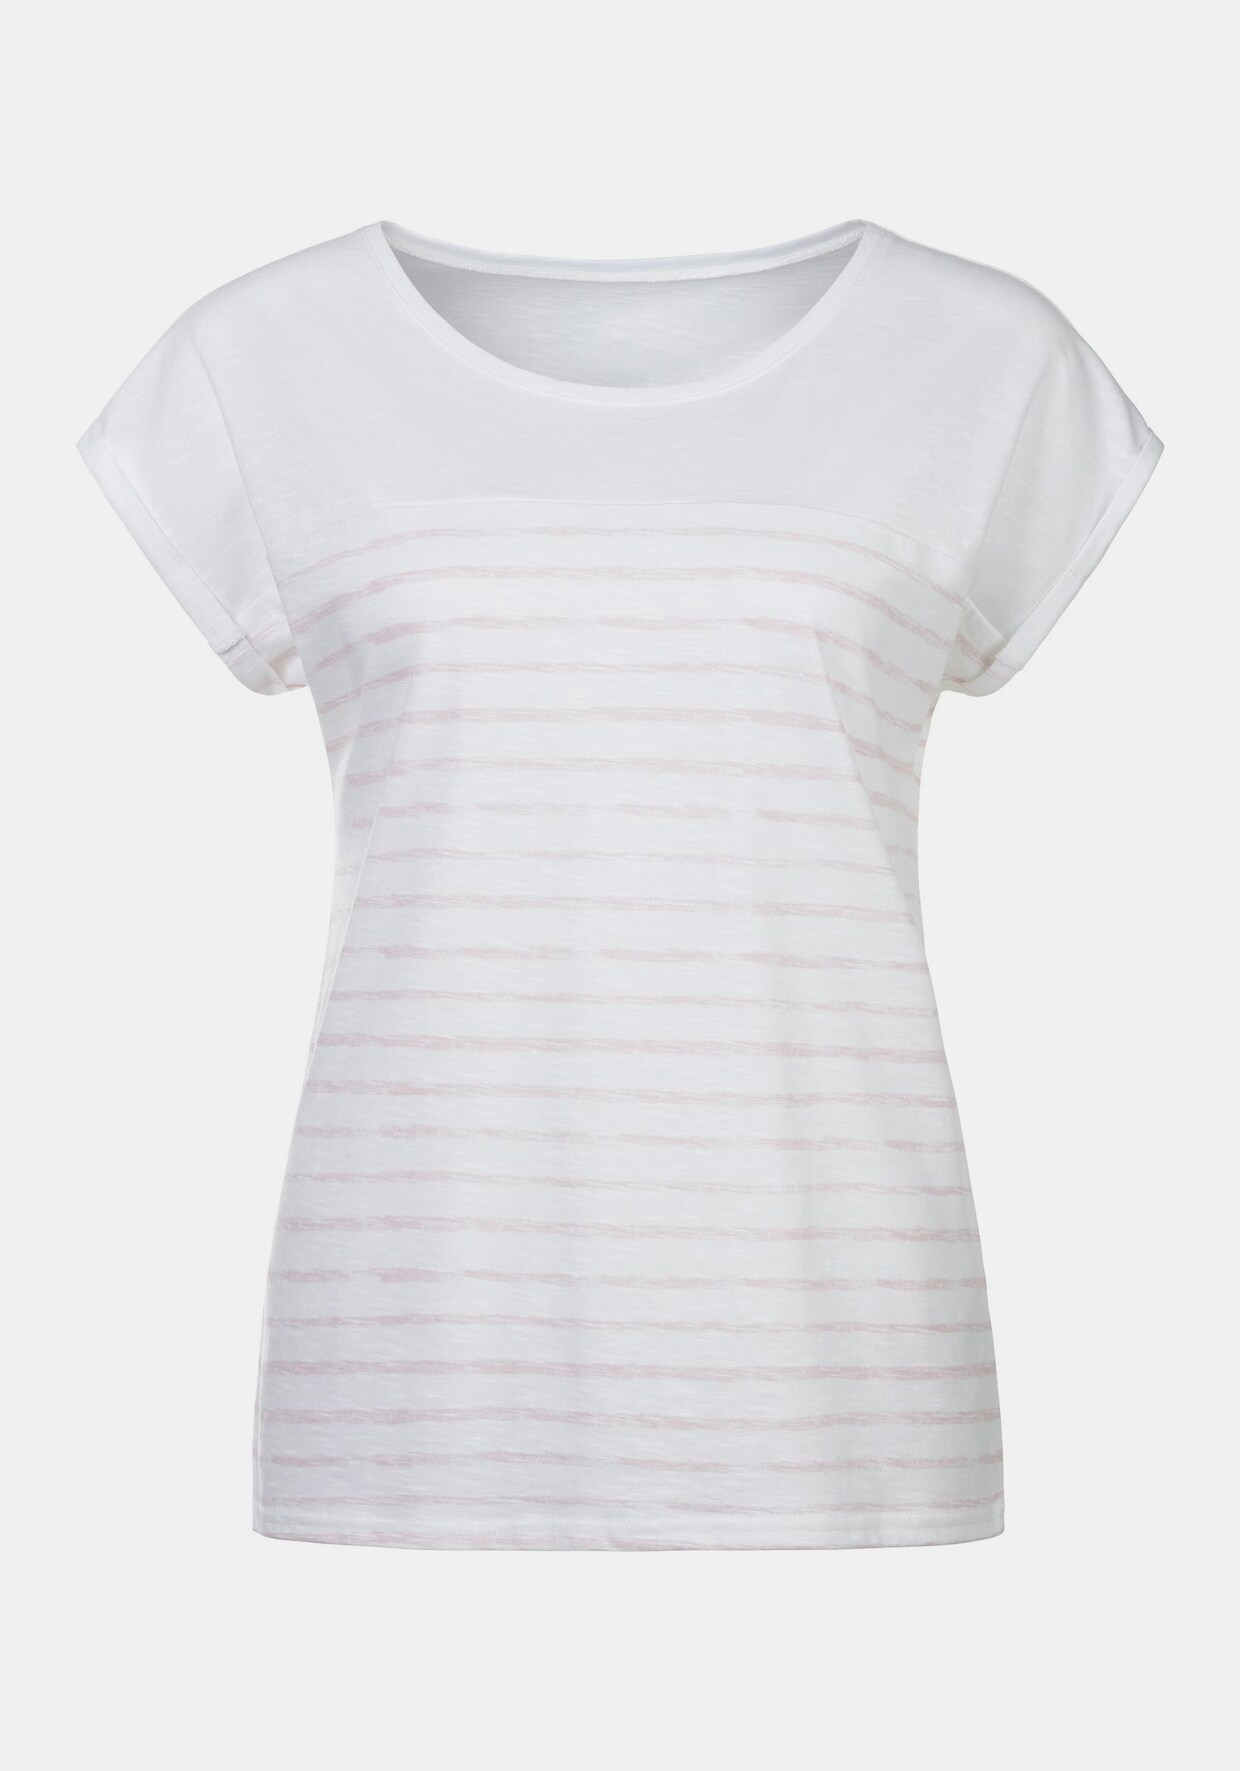 Beachtime T-Shirt - 1x weiß-navy + 1x weiß-rosé